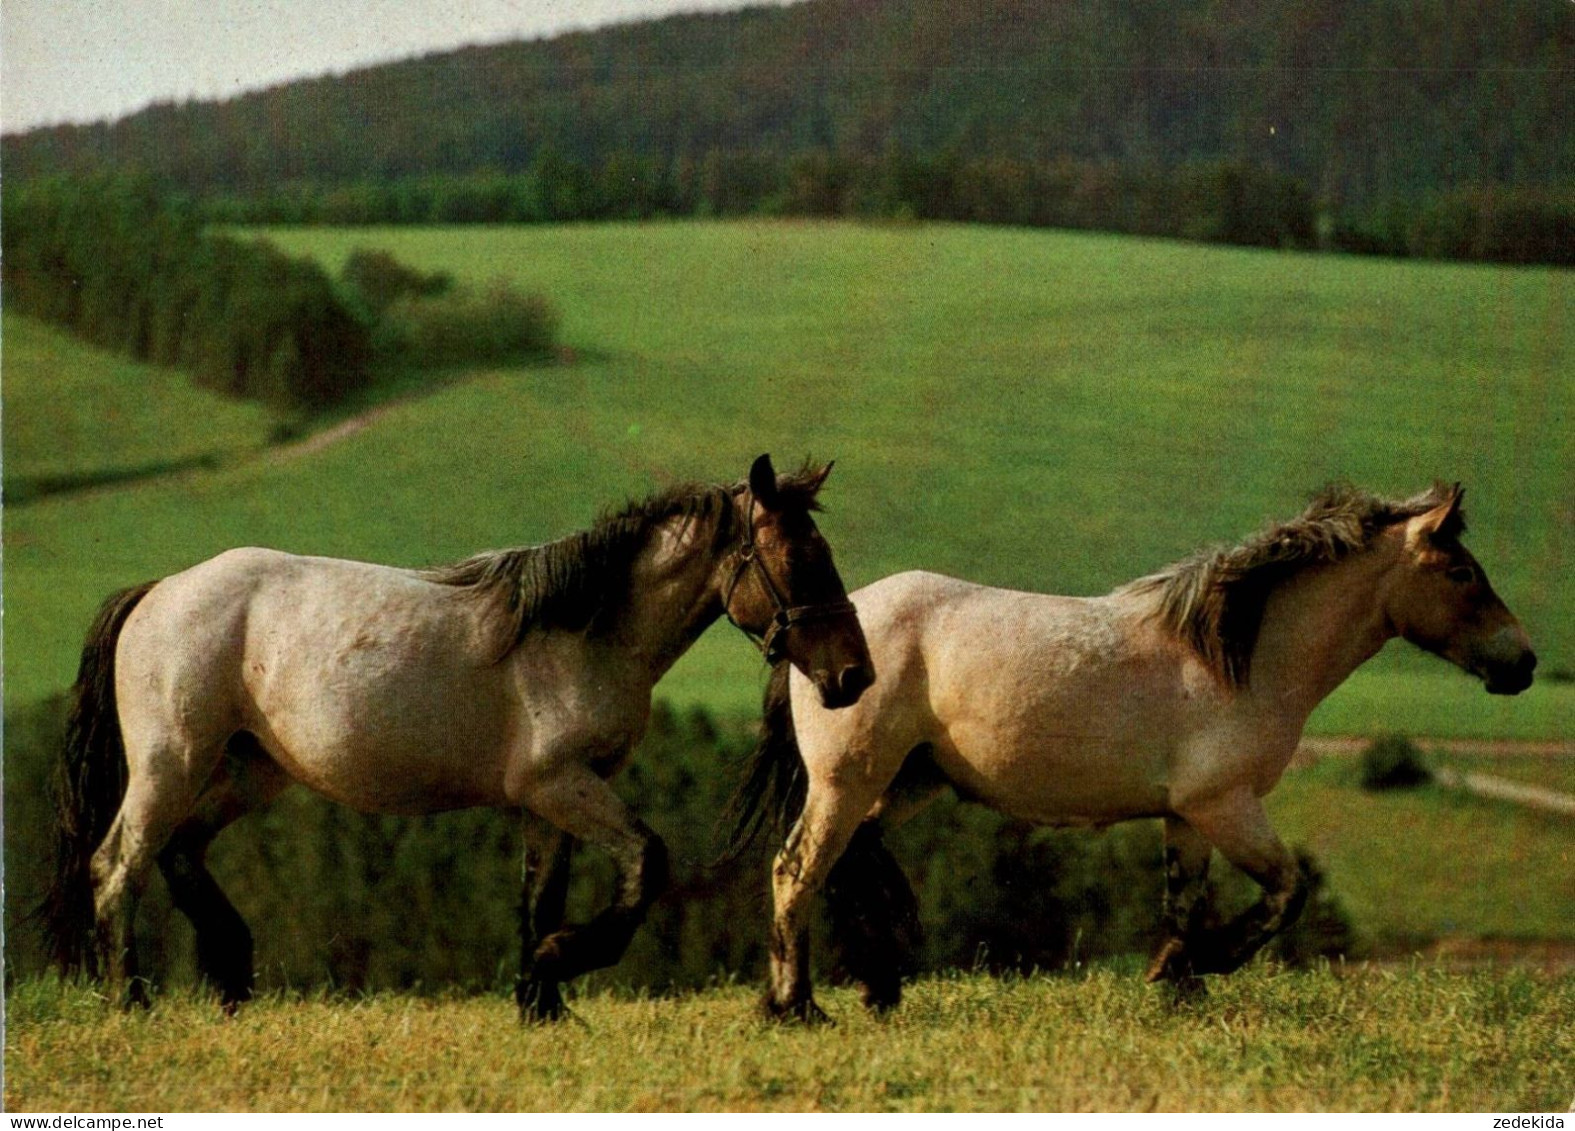 H1723 - TOP Pferd Horses - Planet Verlag DDR - Horses